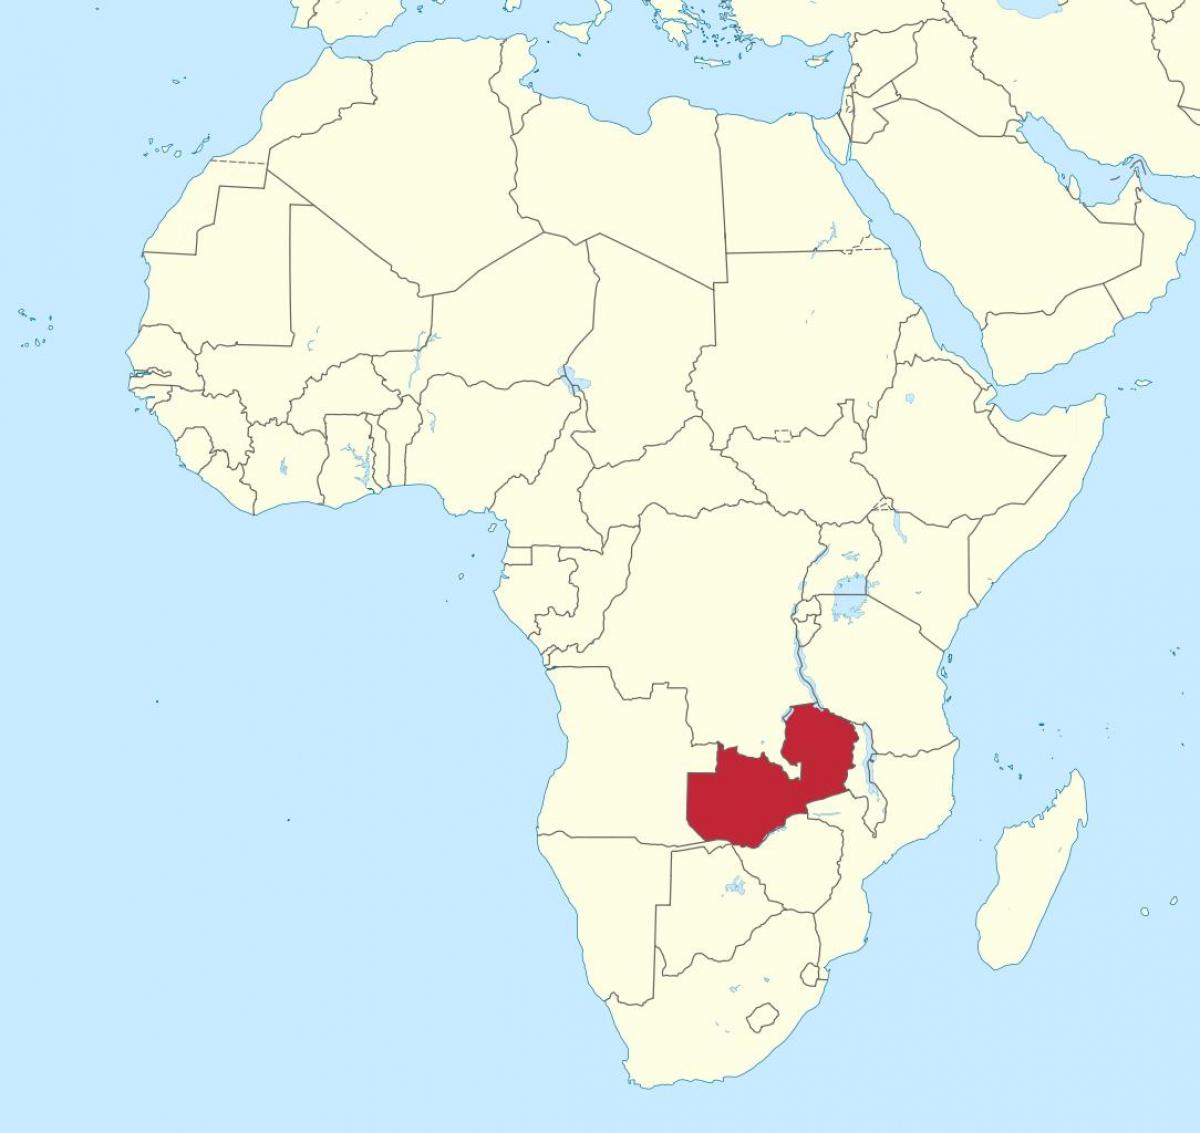 mapa afrikan erakutsiz Zambia